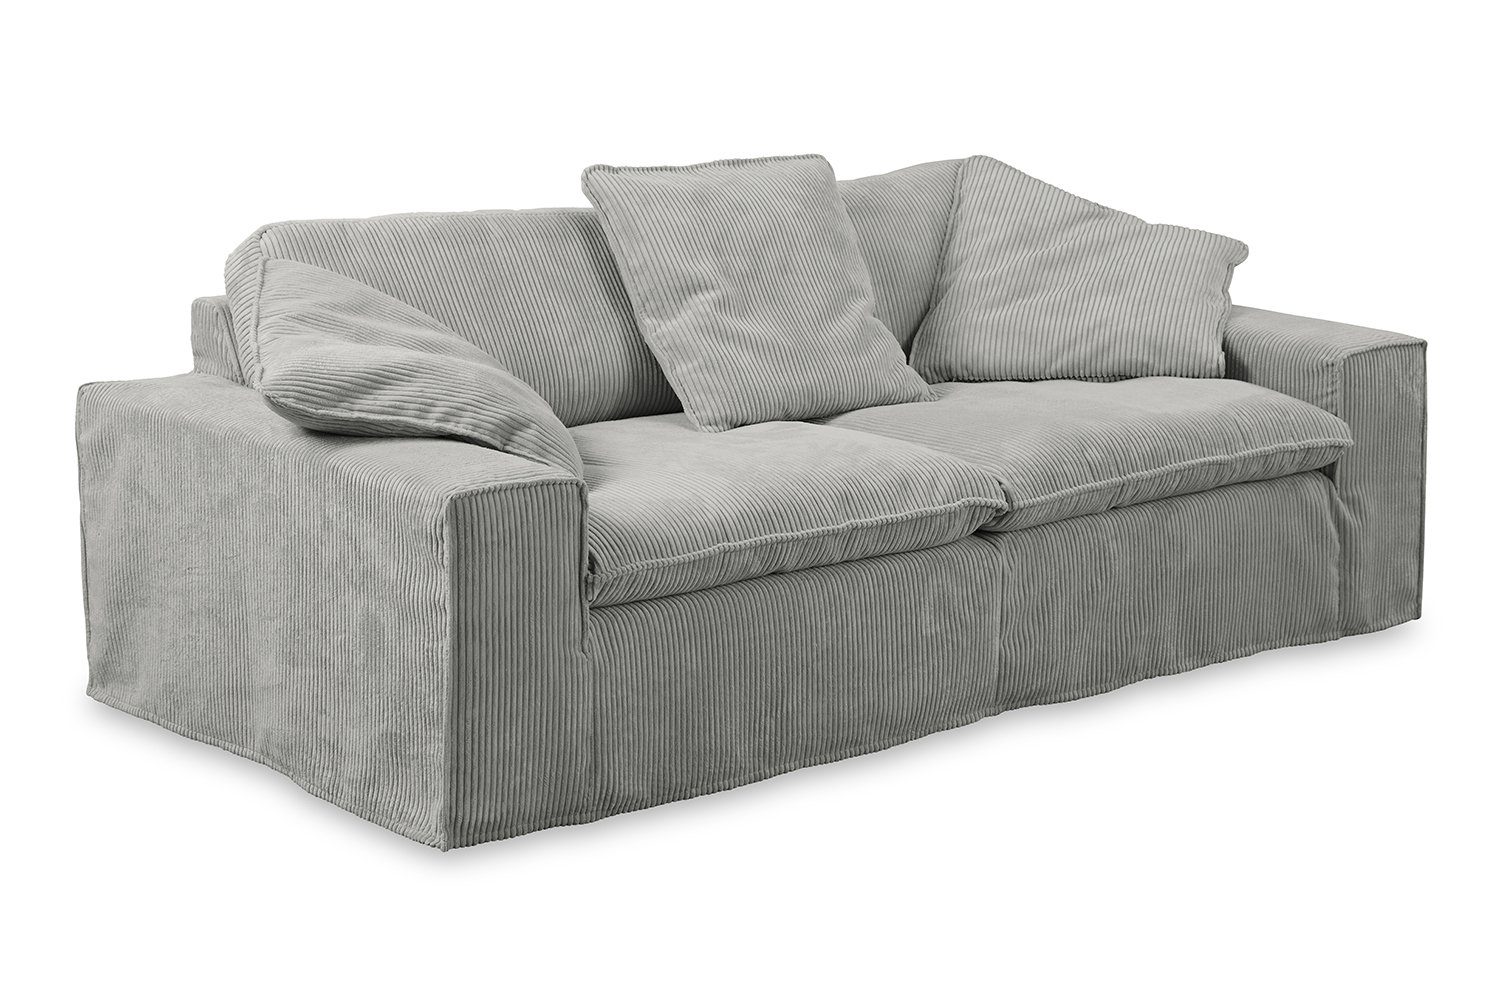 KAWOLA 3-Sitzer | Sofa dunkelgrau Cord Farben und Bezug versch. abziehbar, dunkelgrau NETTA, versch. Breiten